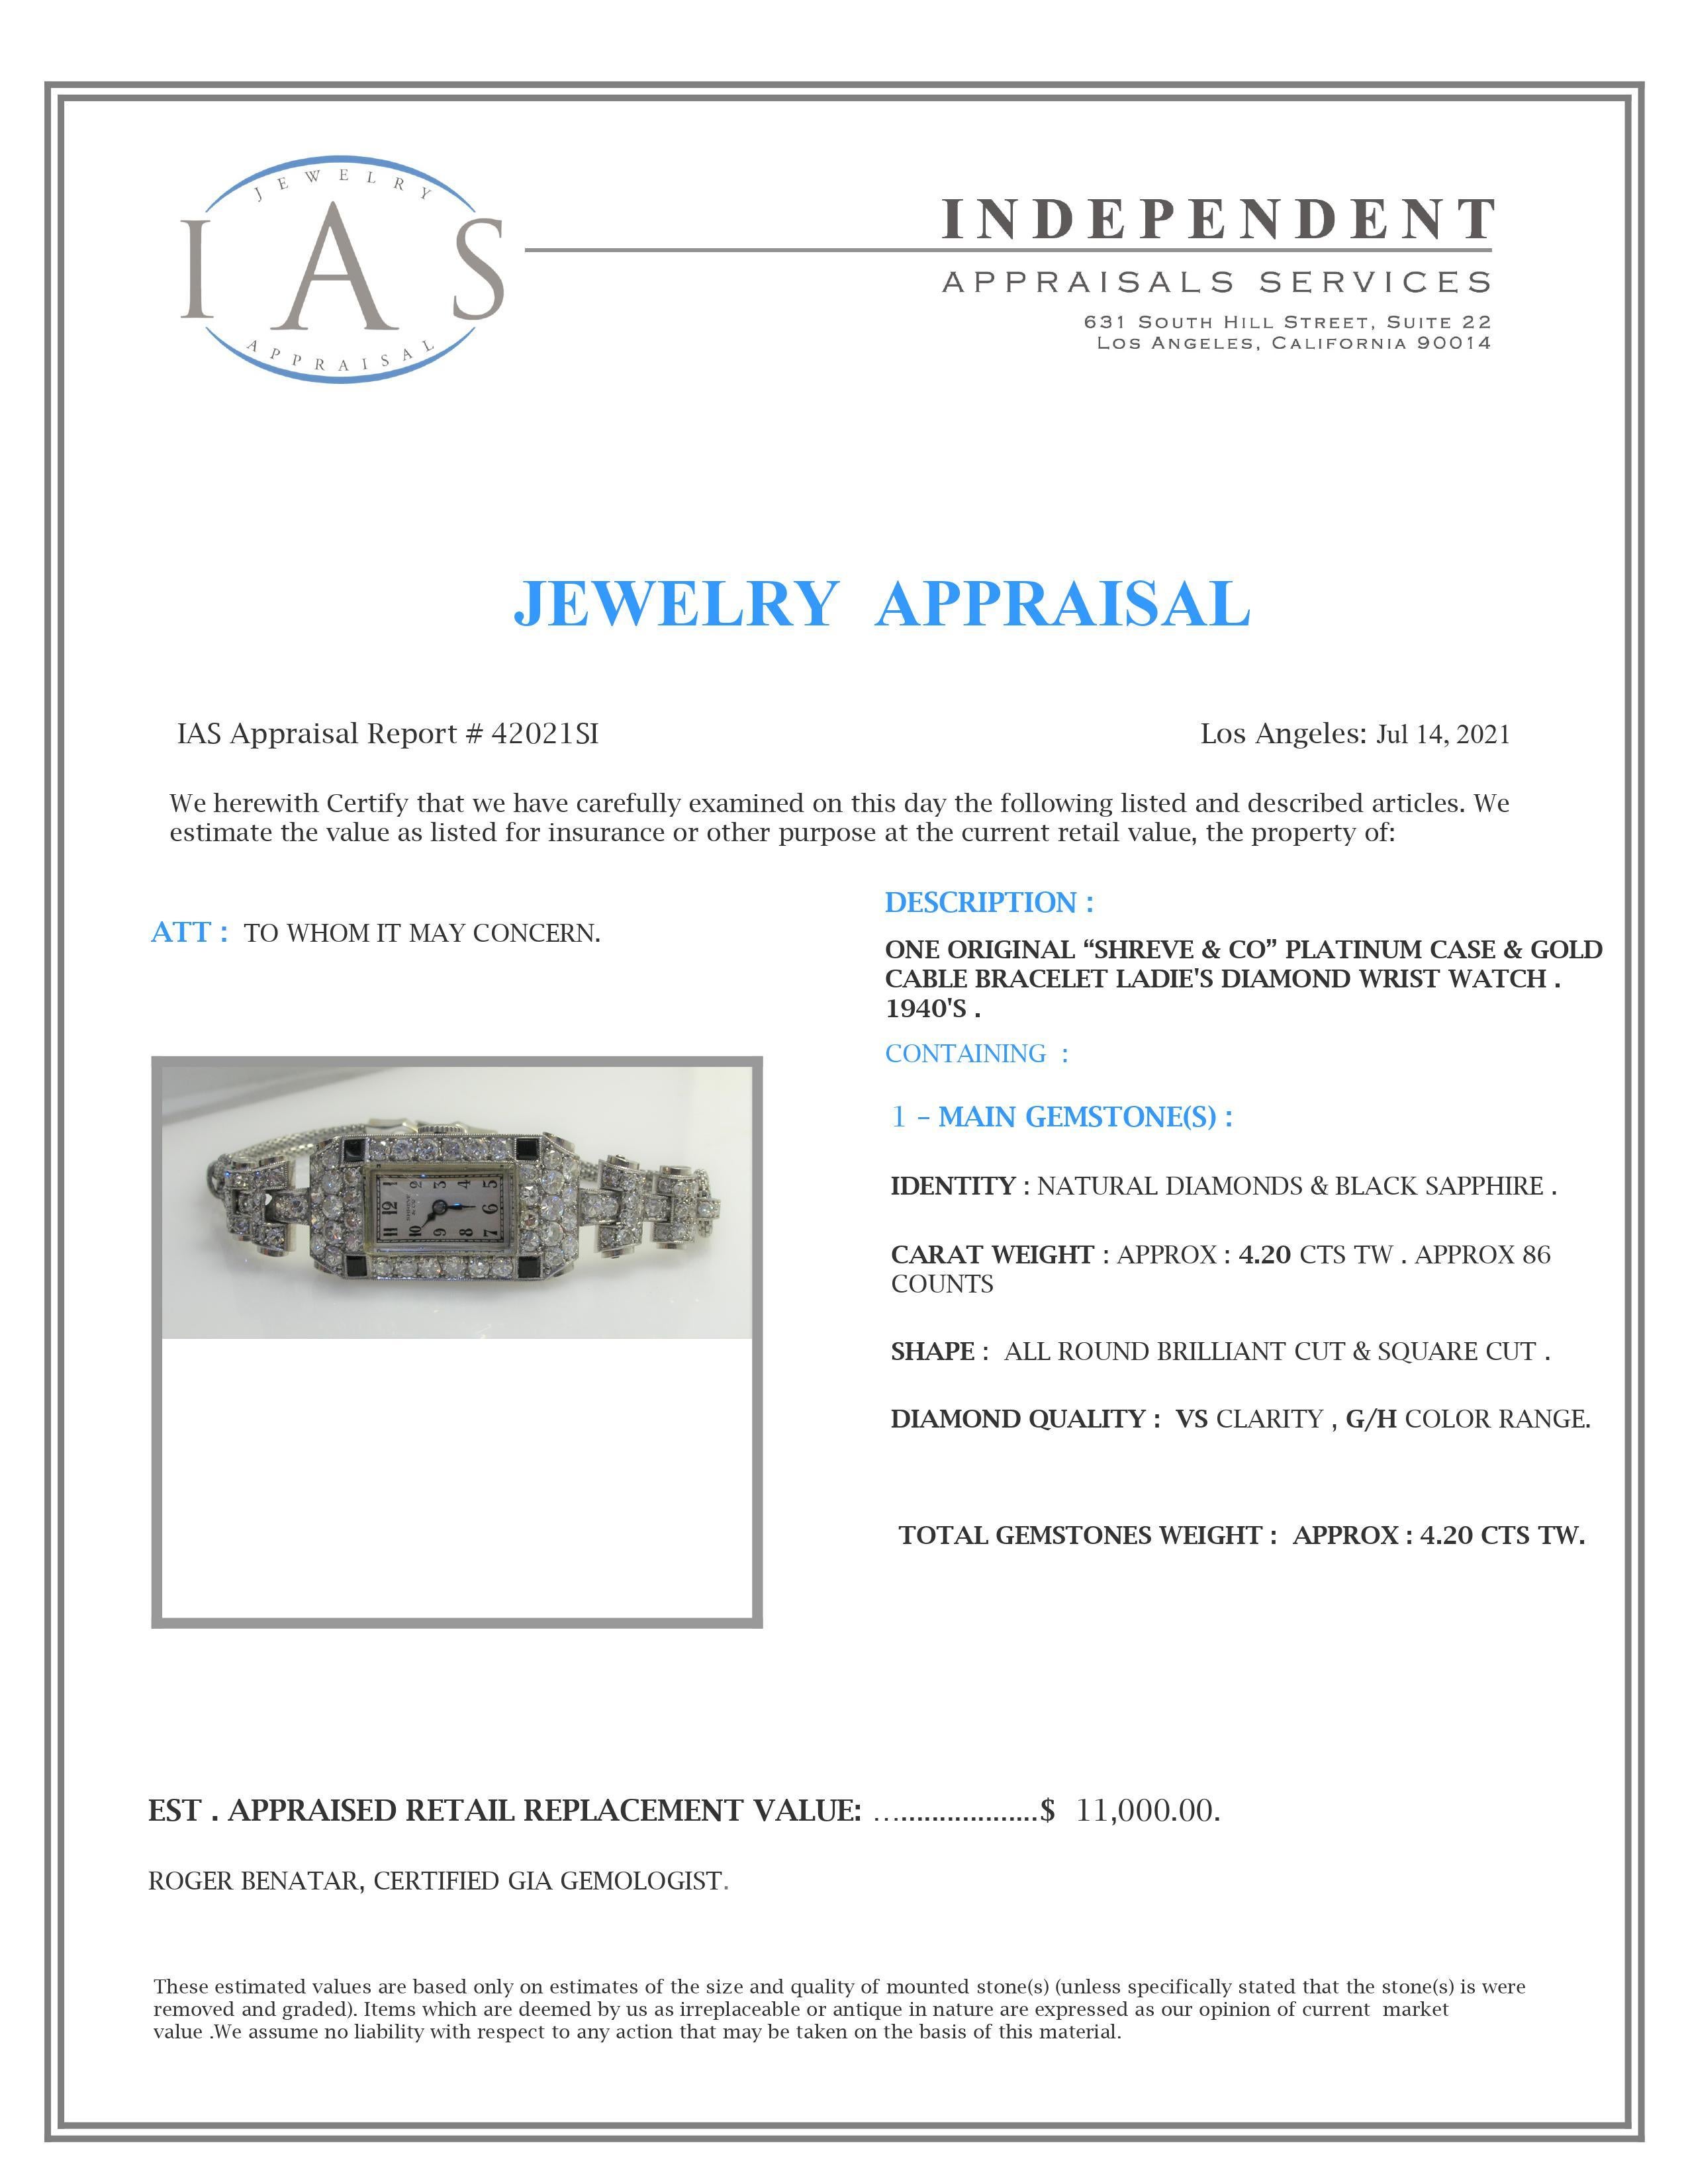 Shreve & Co. Ladies Platinum Diamond Bracelet Watch 2